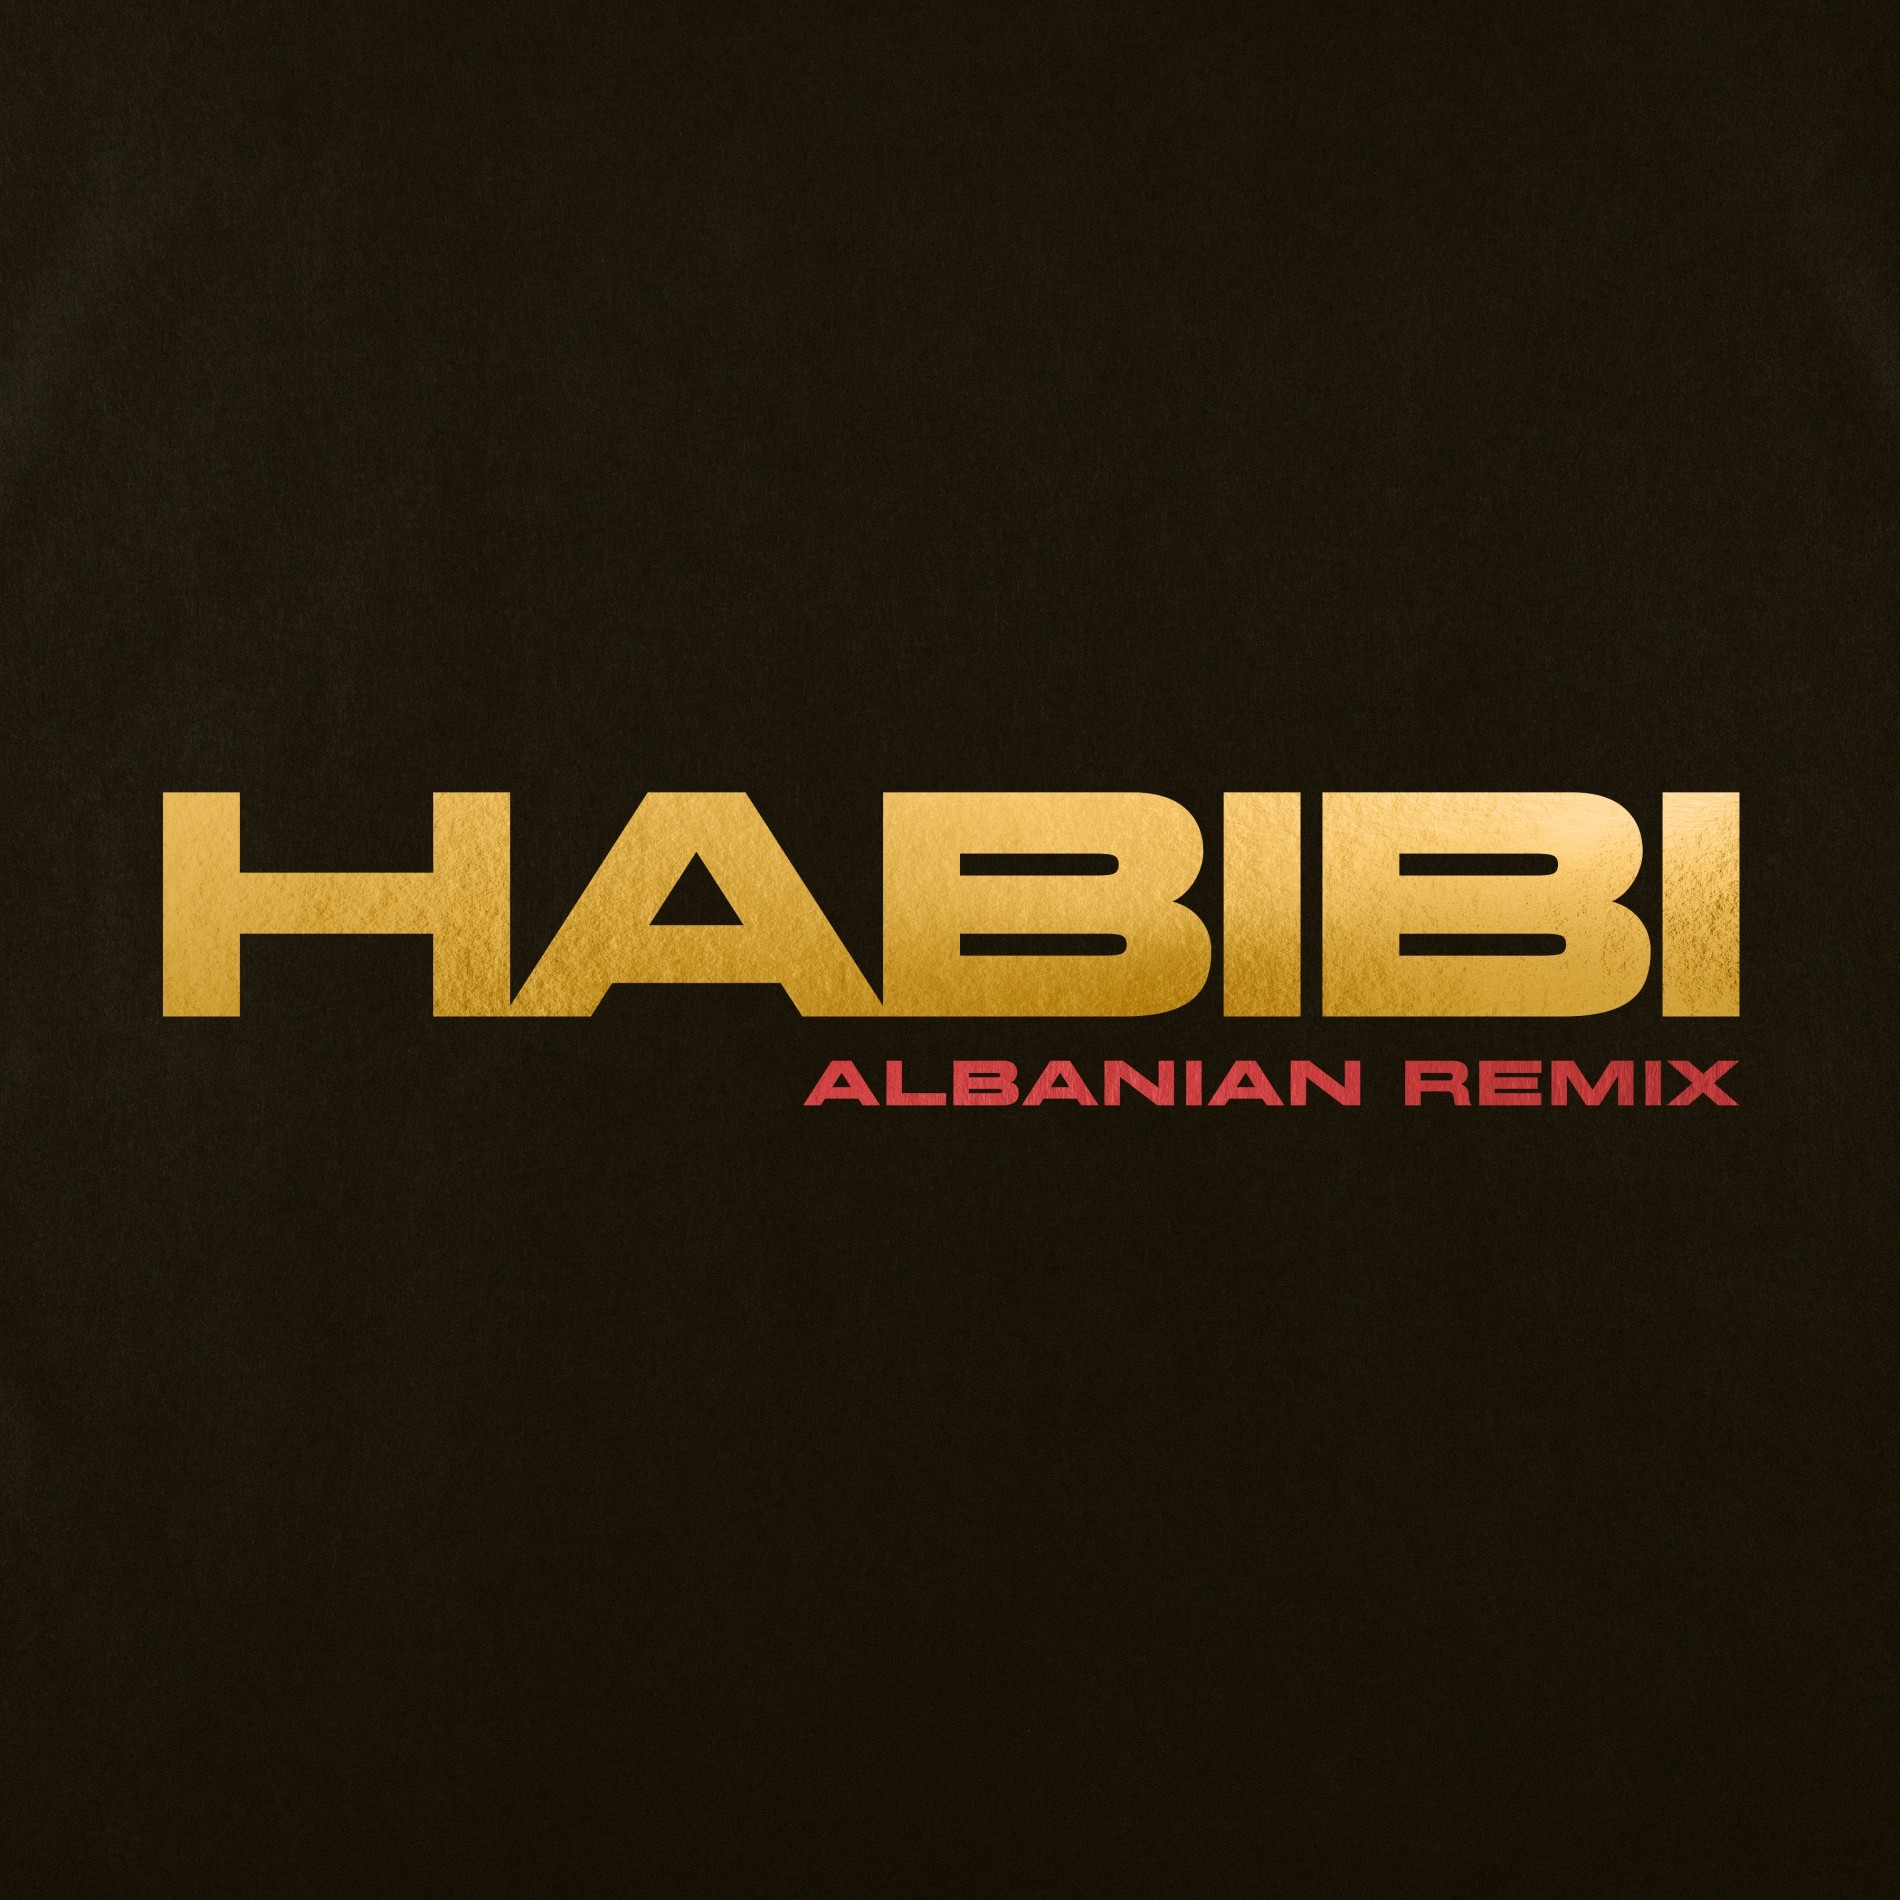 Habibi ricky rich. Ricky Rich, Dardan Habibi. Habibi Albanian Remix. O Habibi Albanian Remix. Habibi (Albanian Remix) Ricky Rich & Dardan.